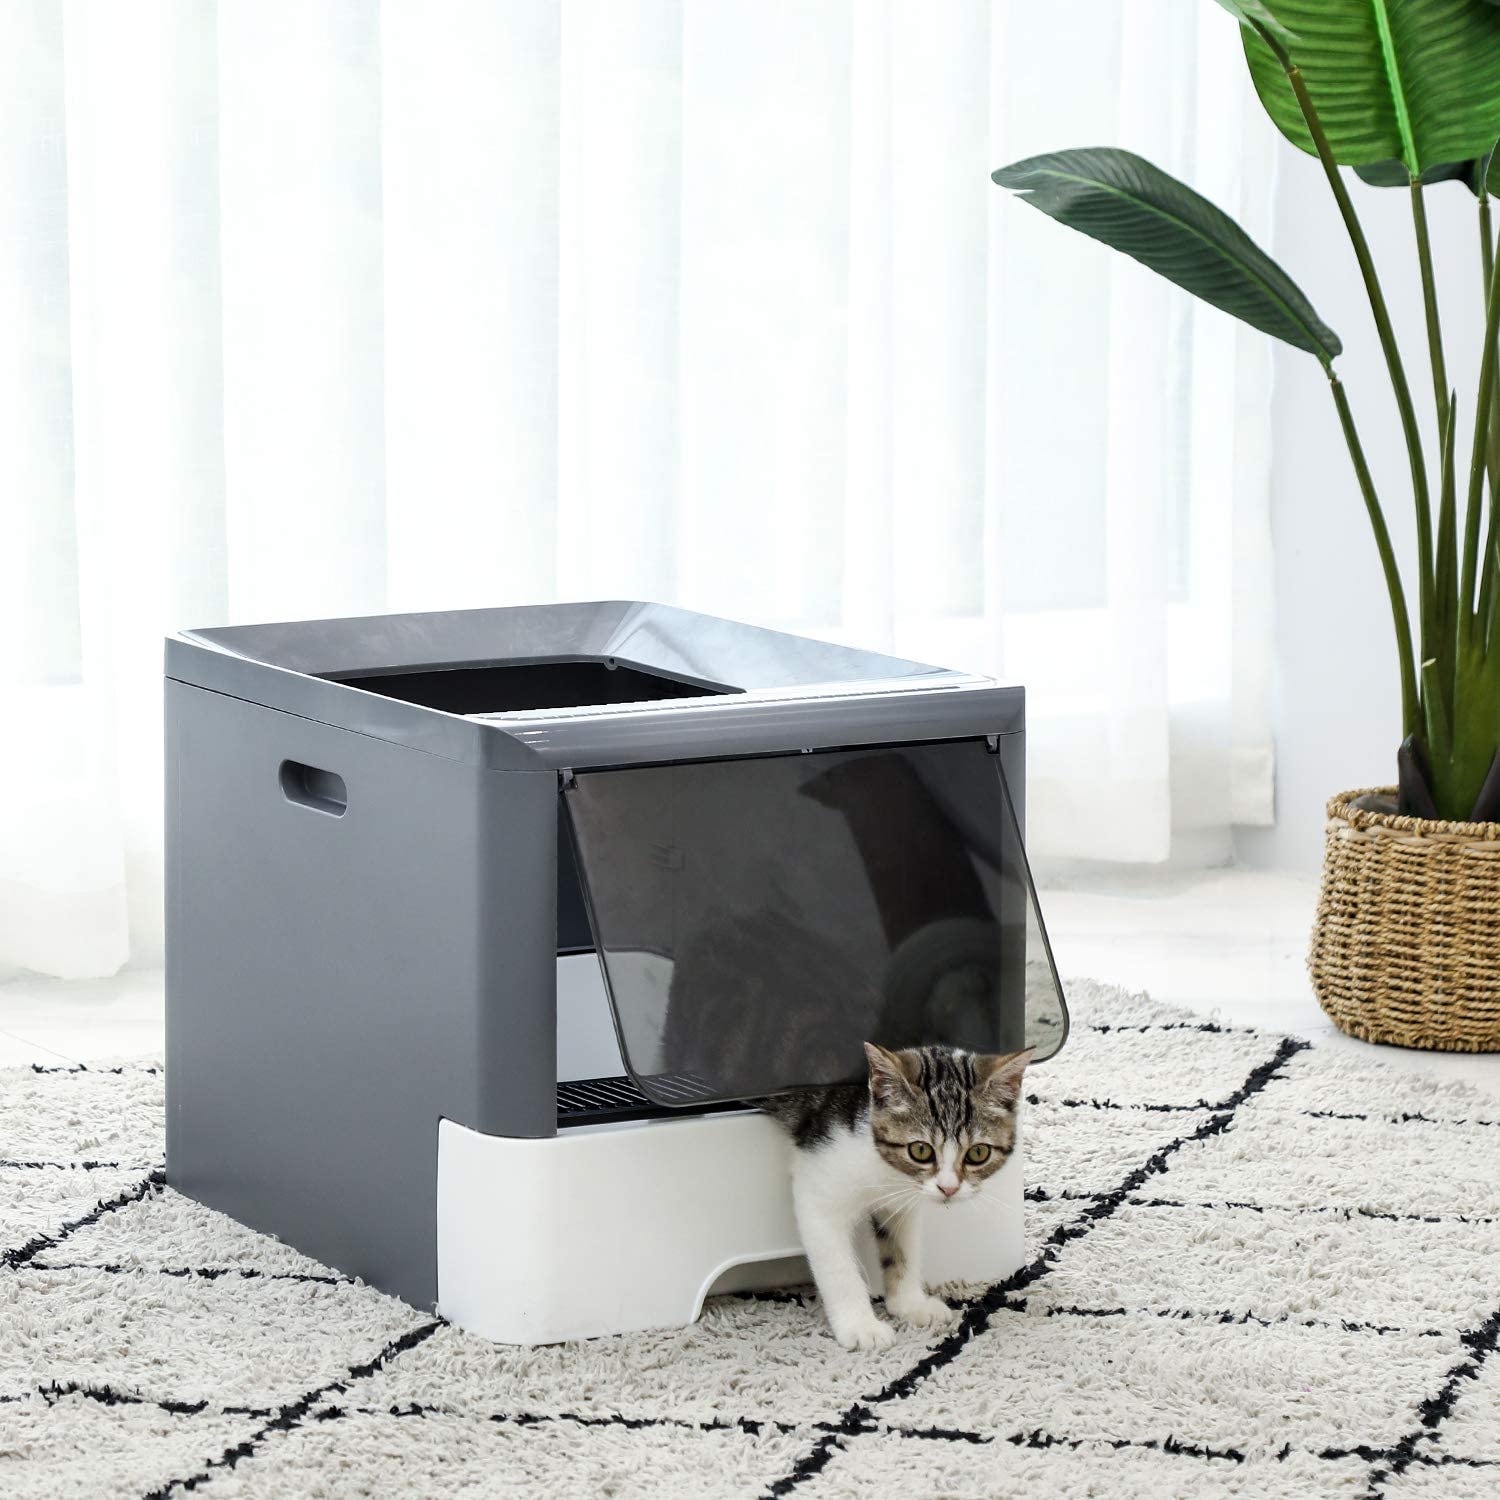 Covered Cat Litter Box - Cat litter Box